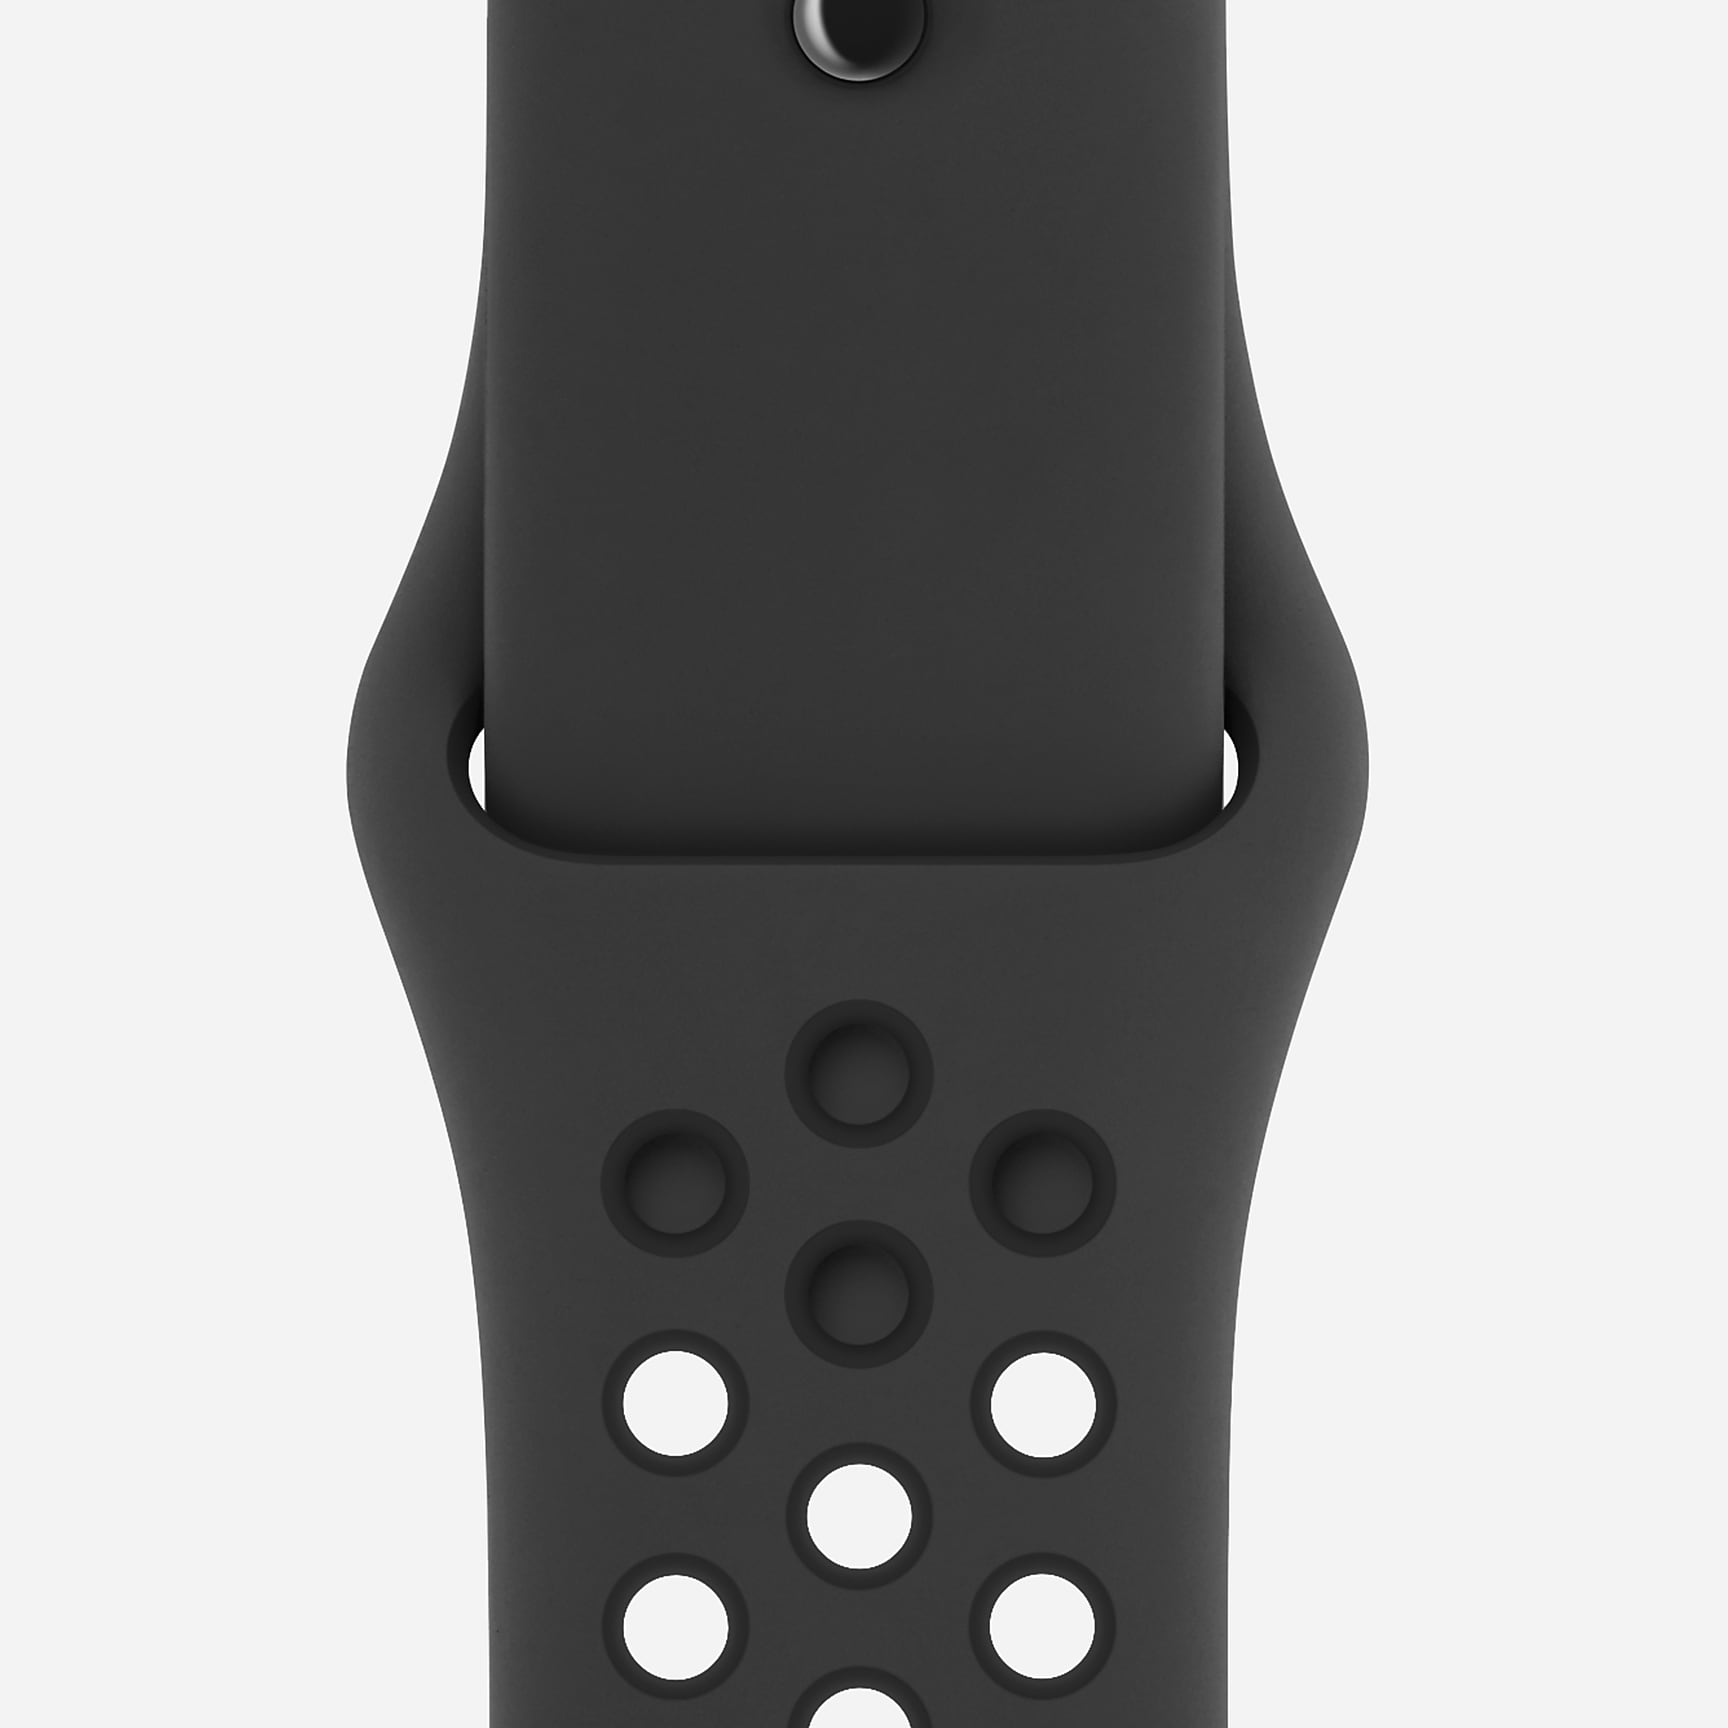 Apple Watch Nike+ GPS Series 3 (42mm) Open Box Running Watch. Nike UK